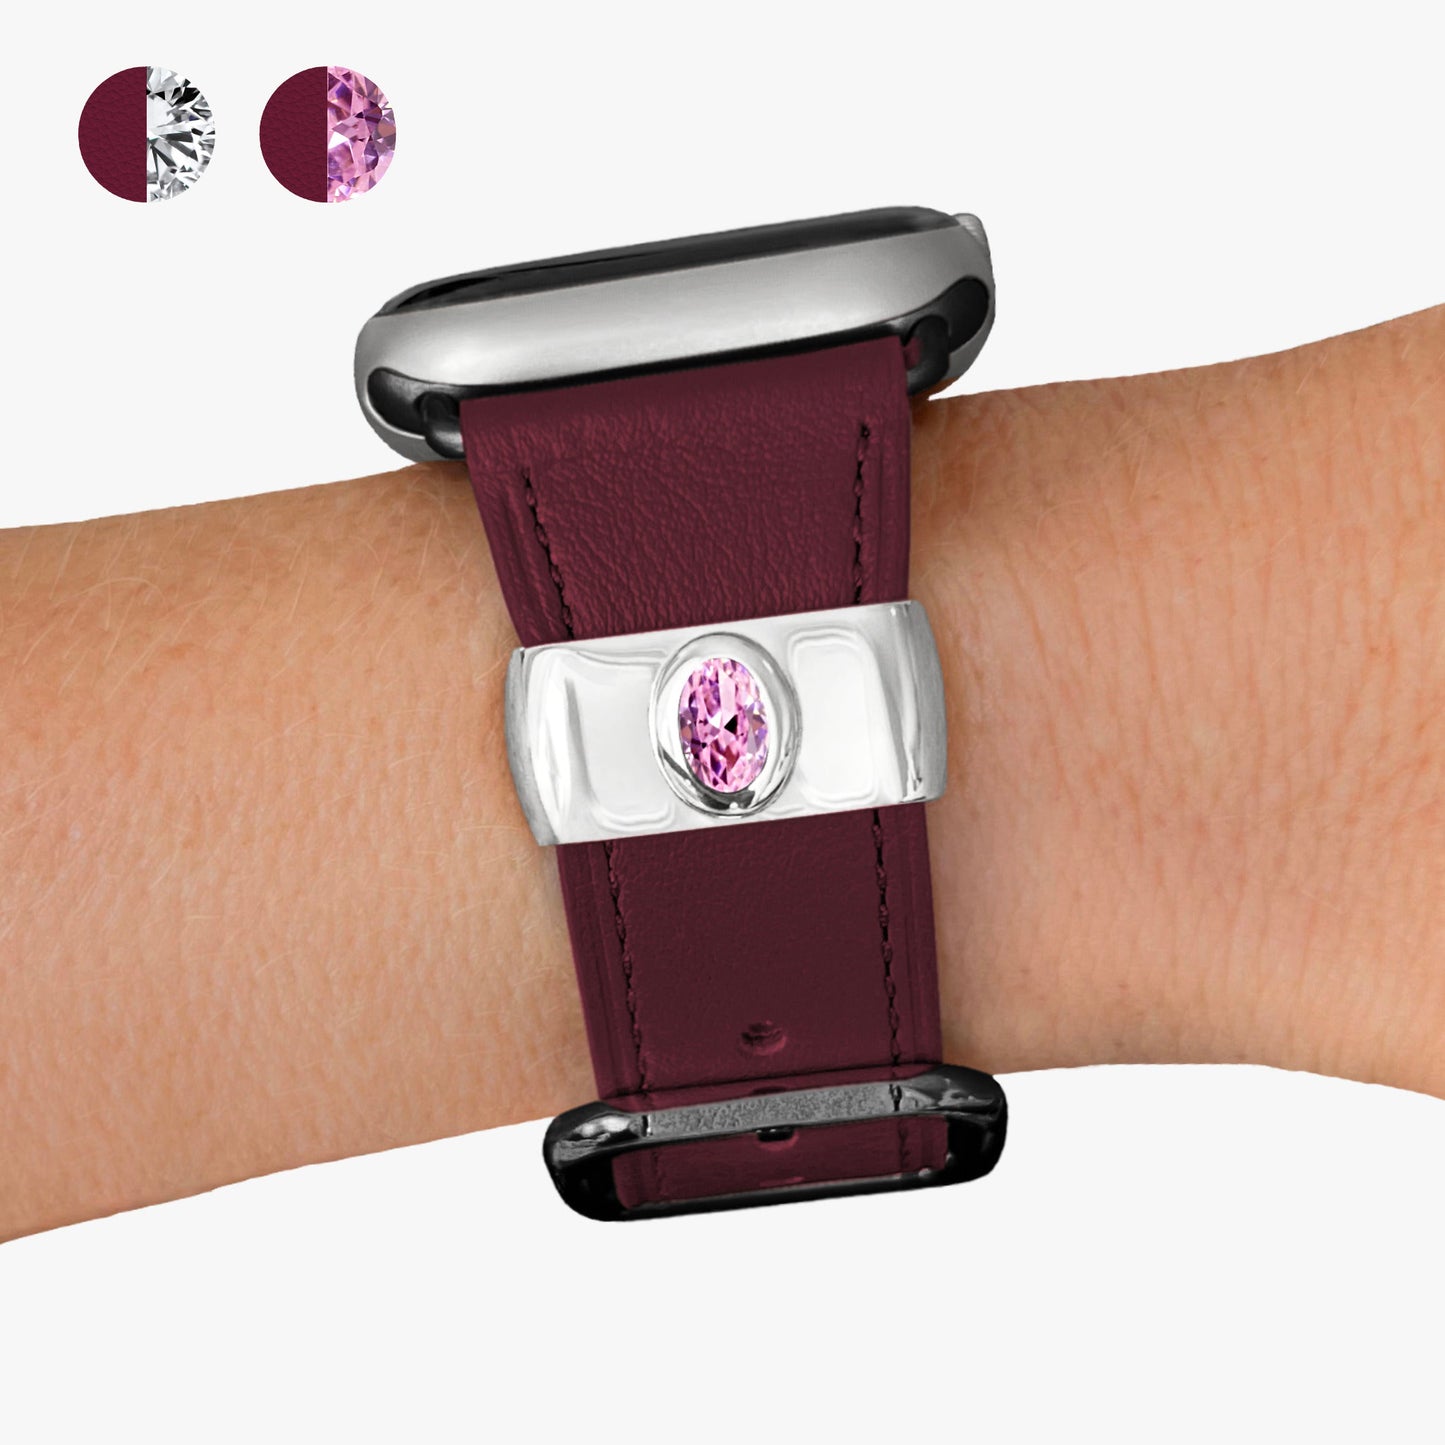 Pamoro® Apple Watch Schmuck Set - Lederband aubergine + Charm in echt Silber rhodiniert - ovaler Cubic Zirkonia in pink